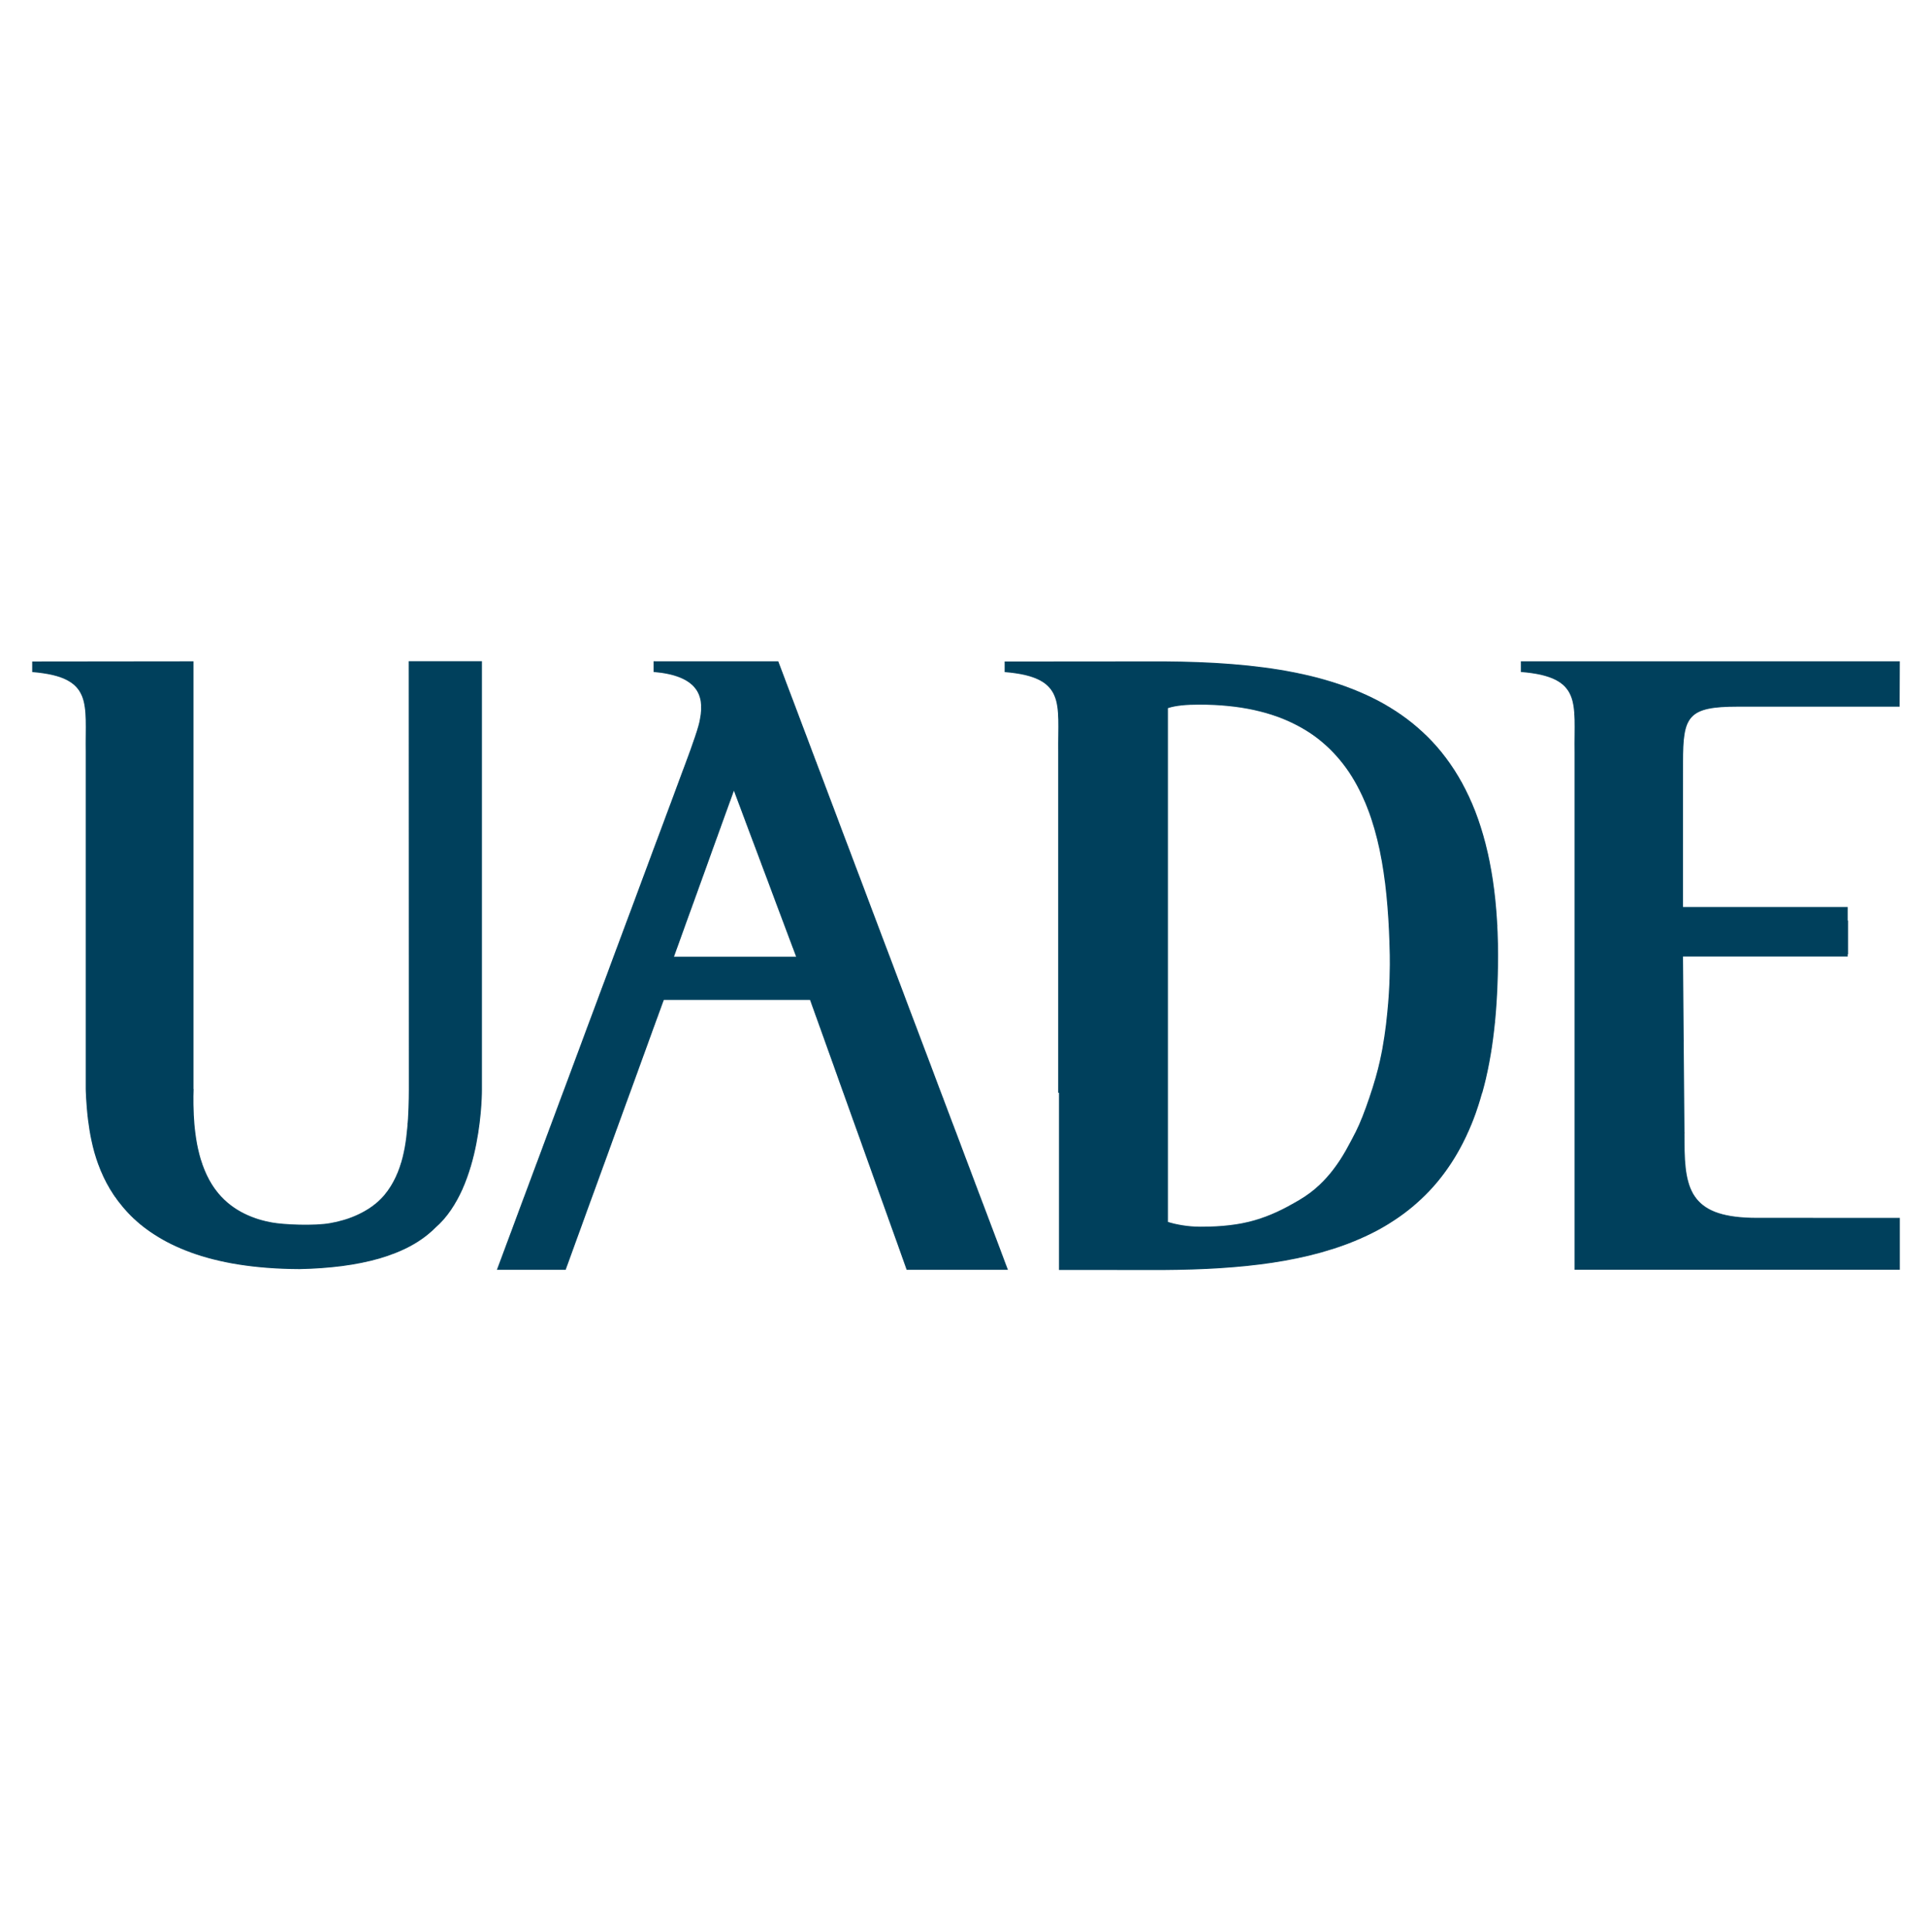 Looo Uade Logo  Transparent Image